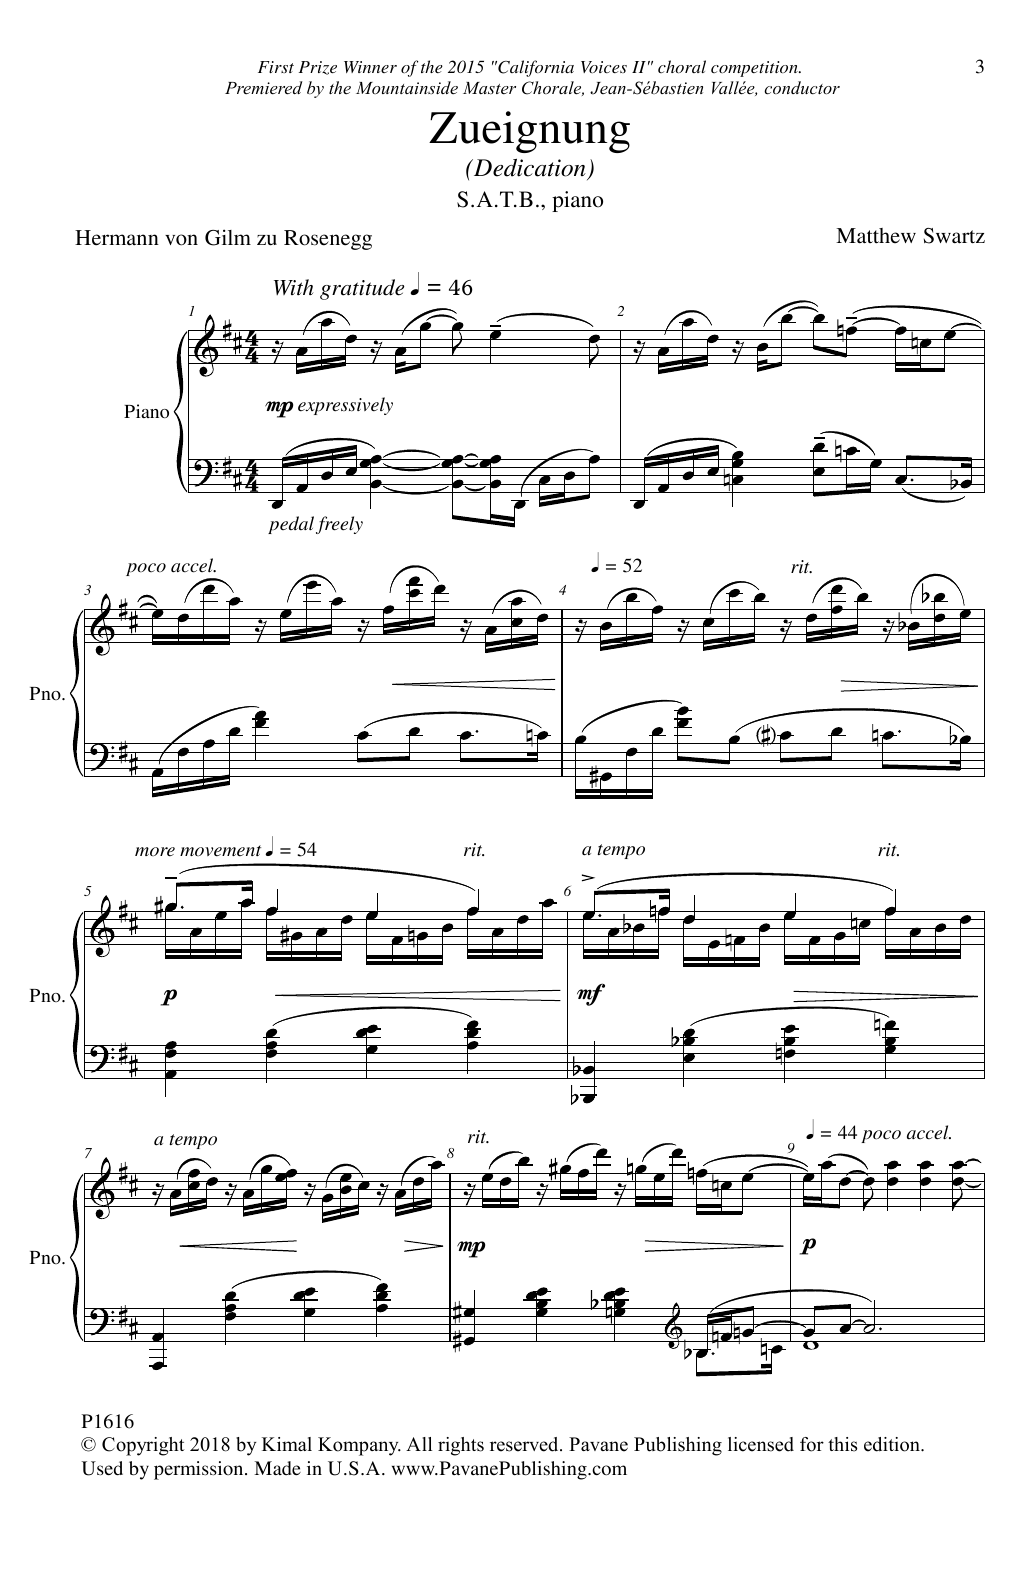 Matthew Swartz Zueignung (Dedication) Sheet Music Notes & Chords for SATB Choir - Download or Print PDF